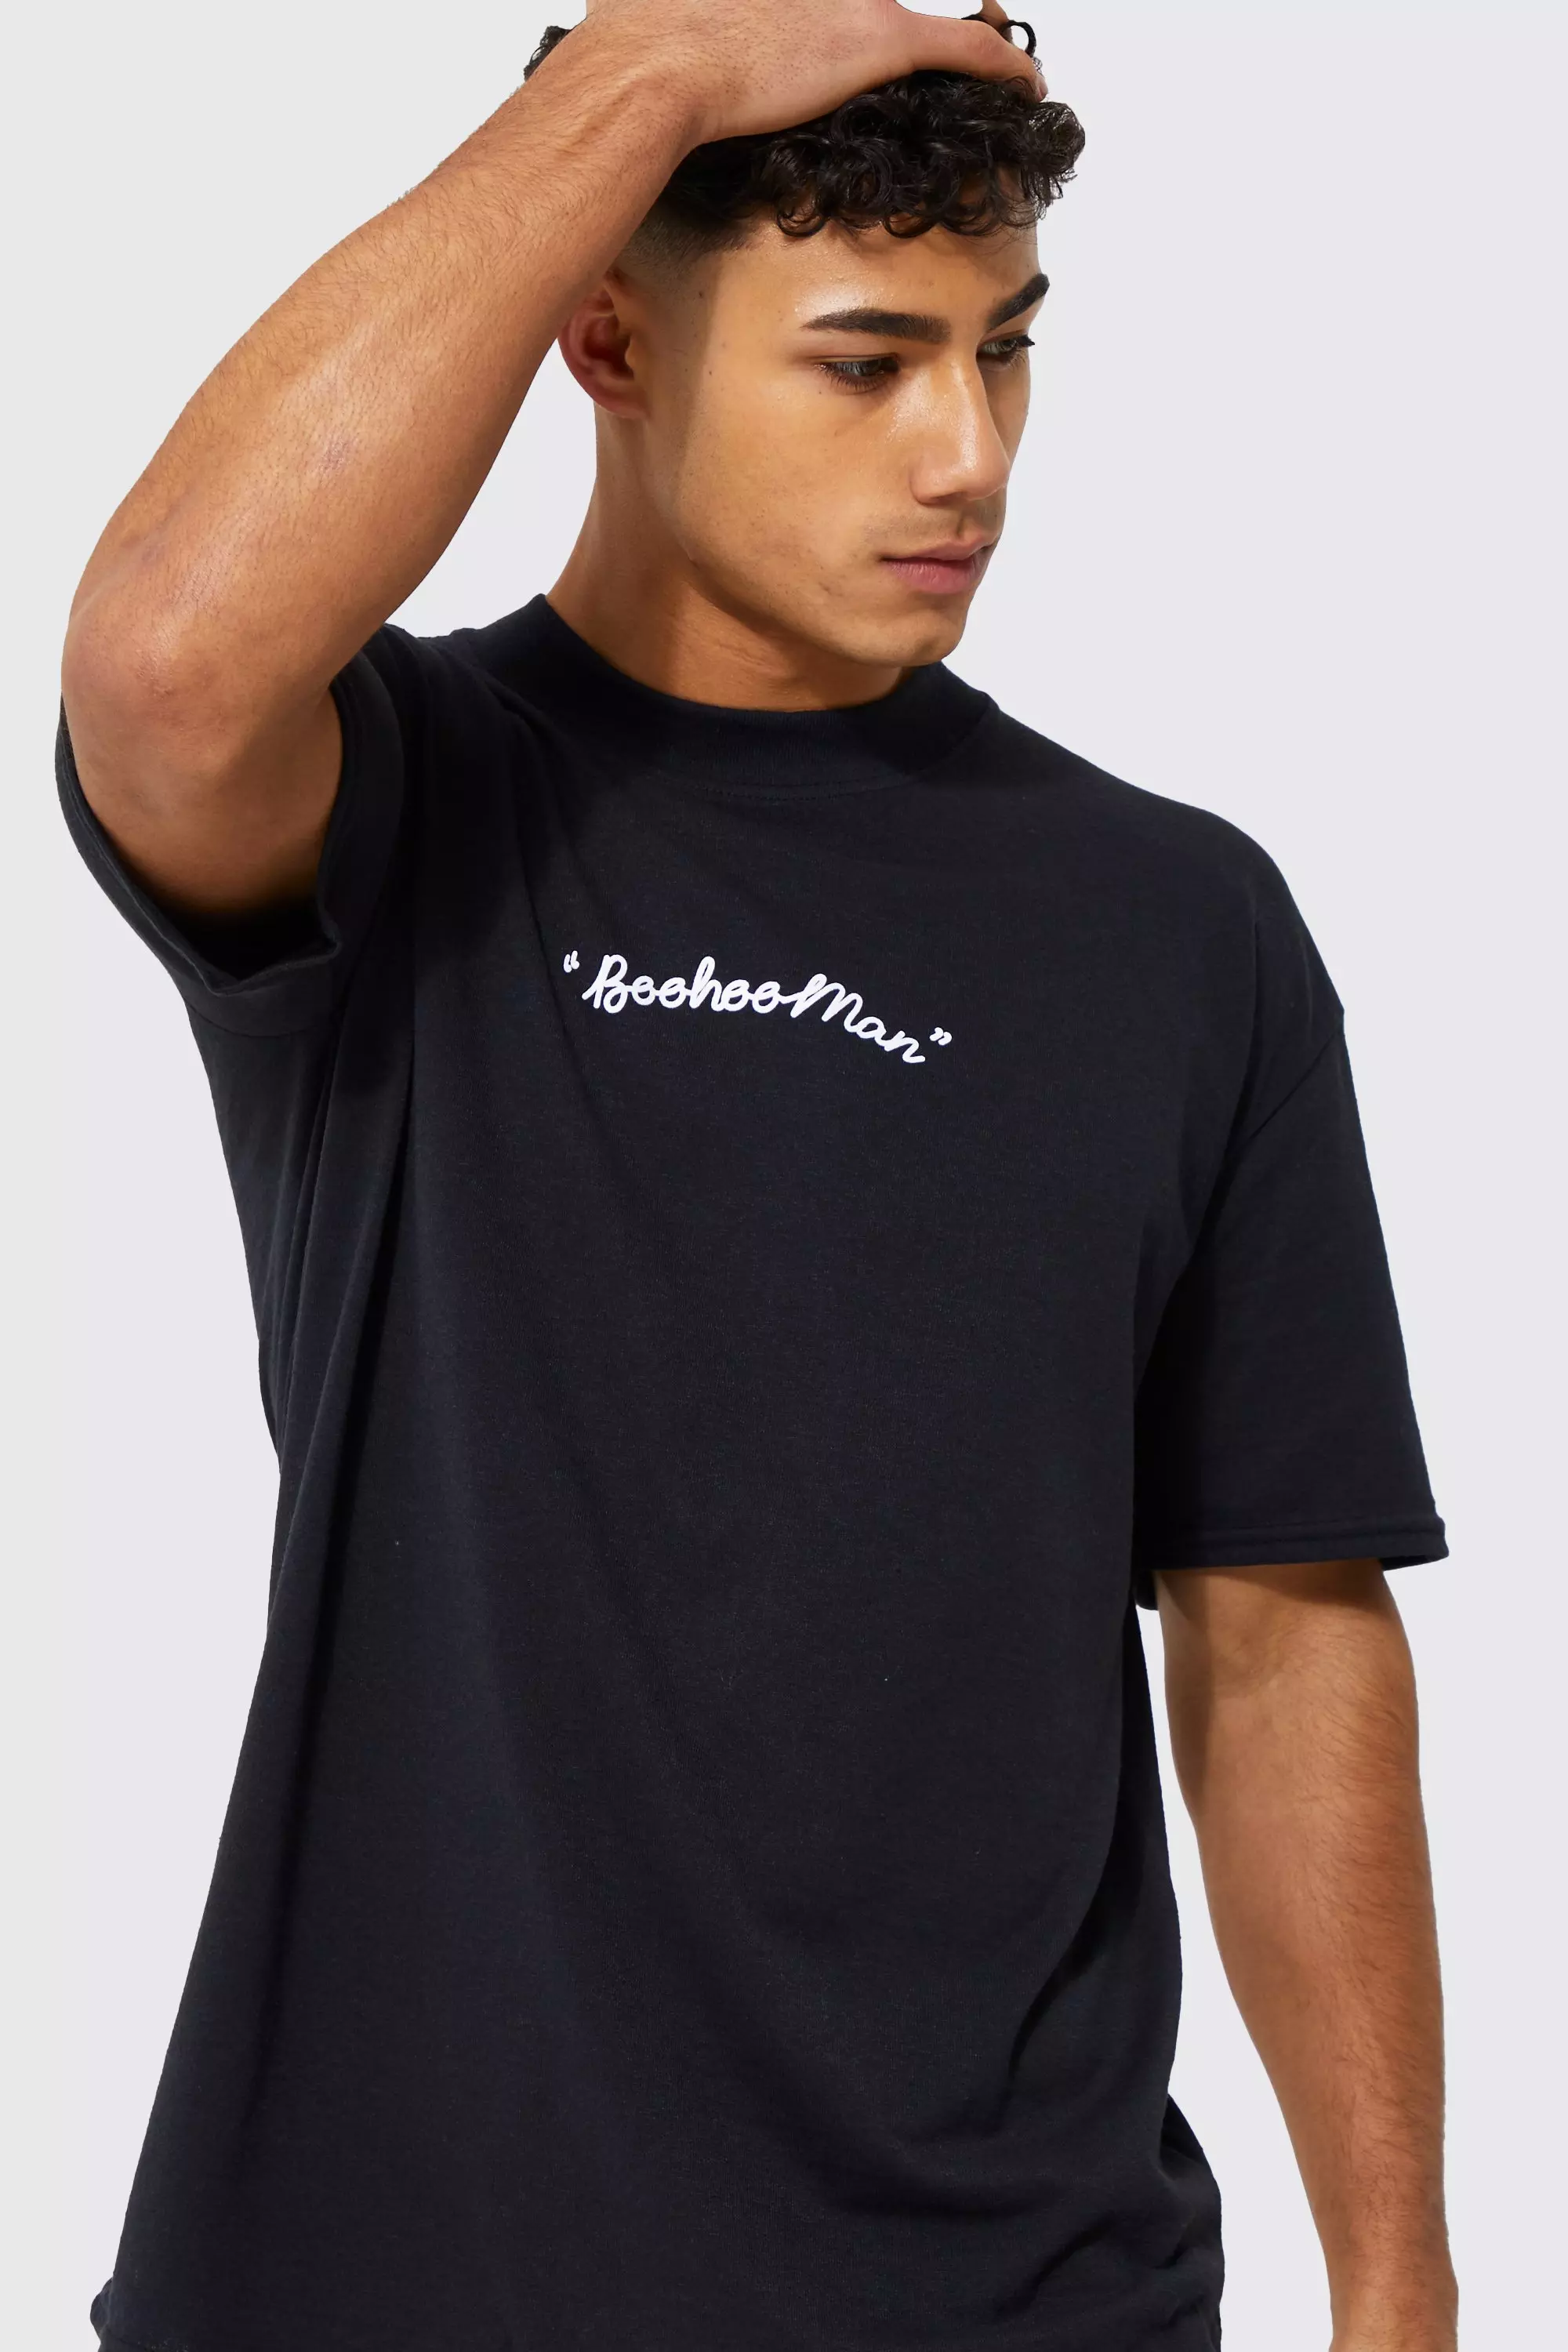 boohoo Tall Universal Graphic Short Sleeve T-Shirt - Black - Size 12